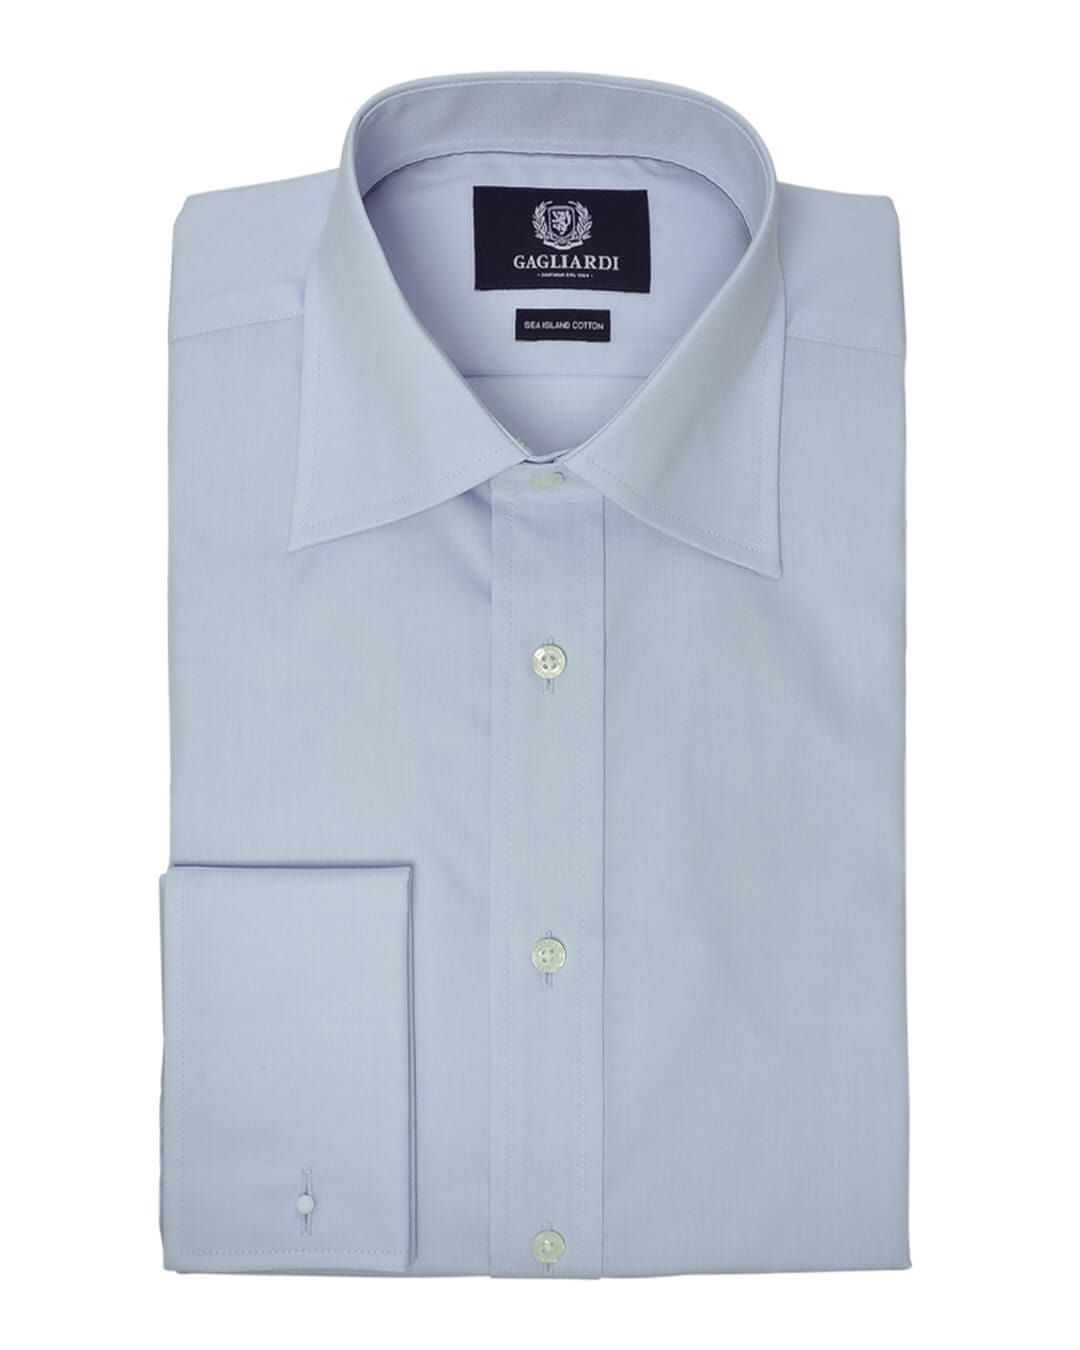 Gagliardi Shirts Blue Sea Island Cotton Tailored Fit Cutaway Collar Double Cuffed Shirt